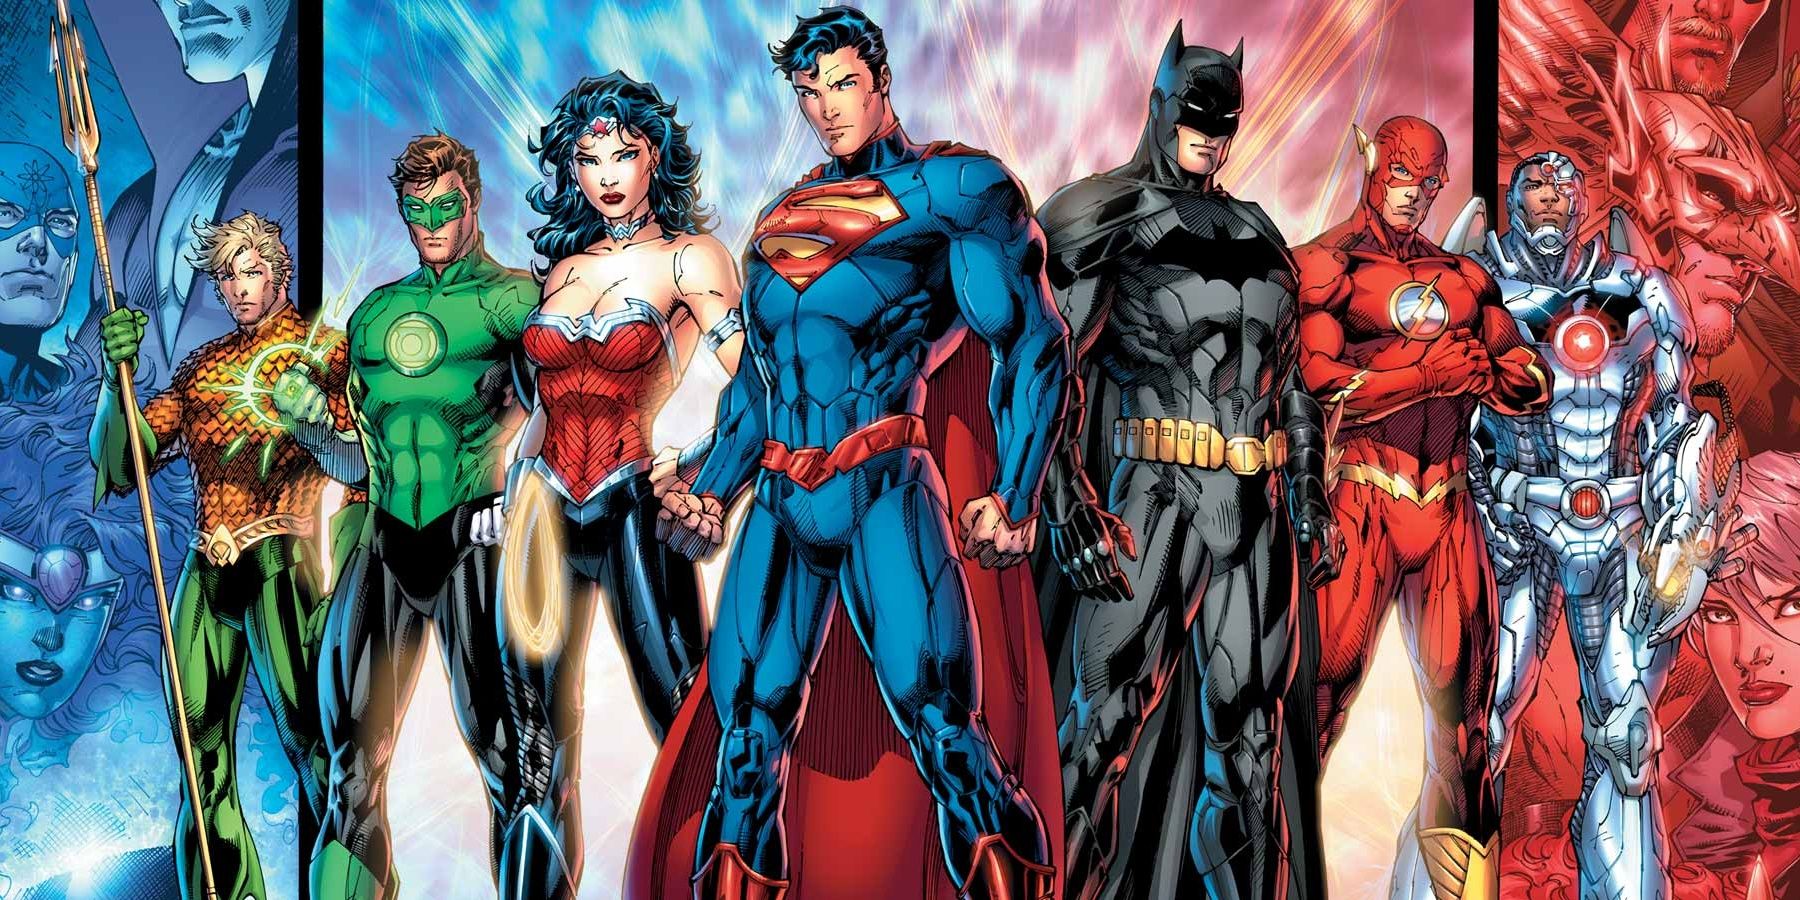 Justice League posing